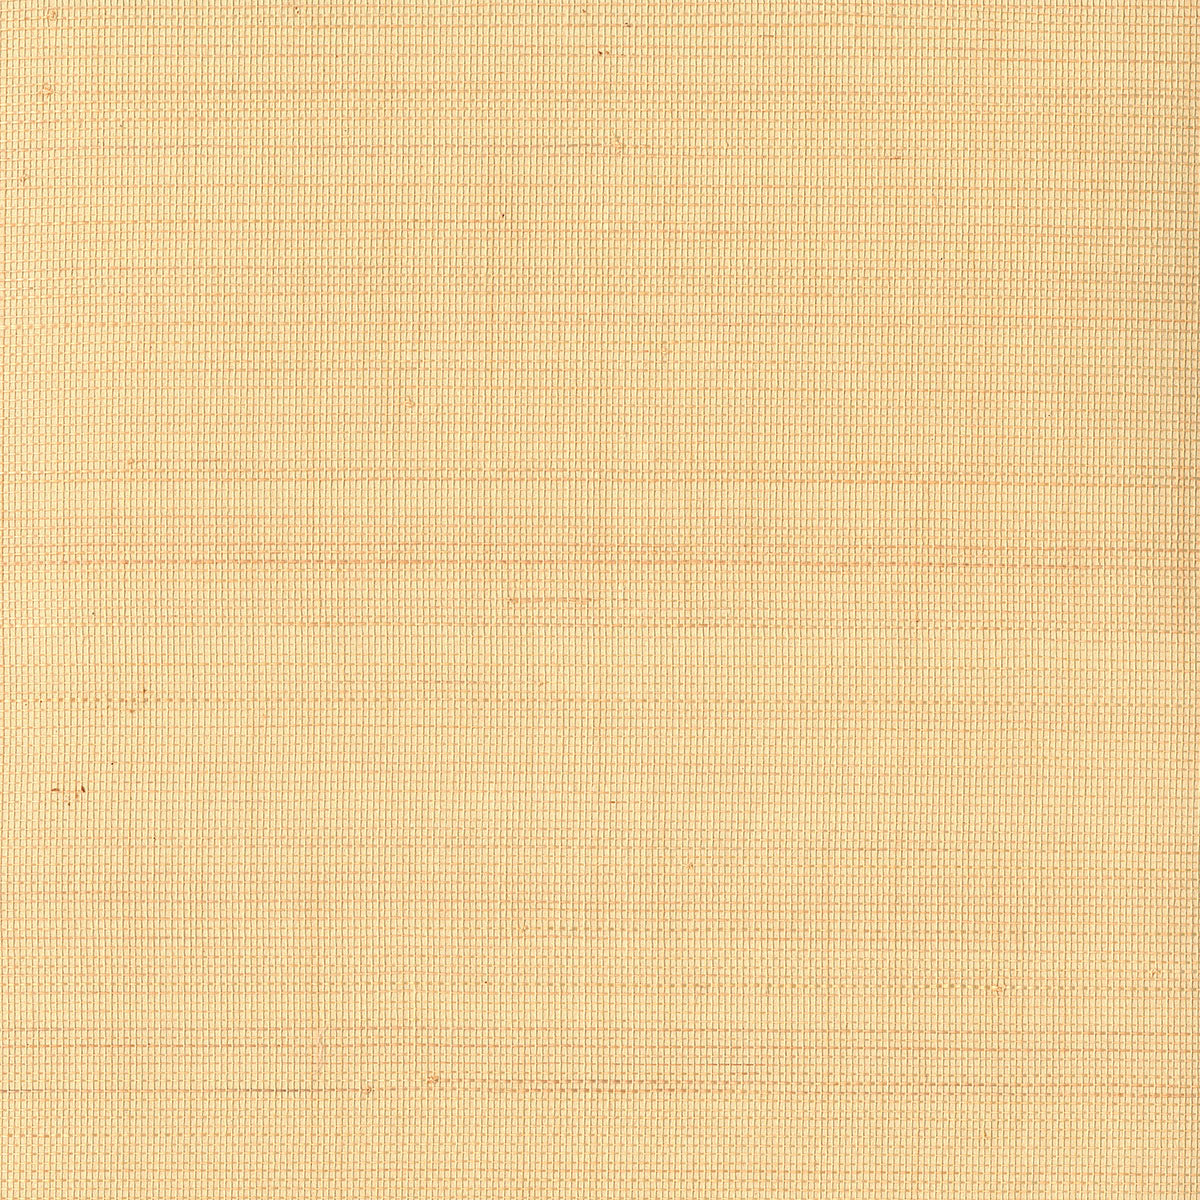 Order 2693-30229 Zen Danan Honey Grasscloth Kenneth James Wallpaper